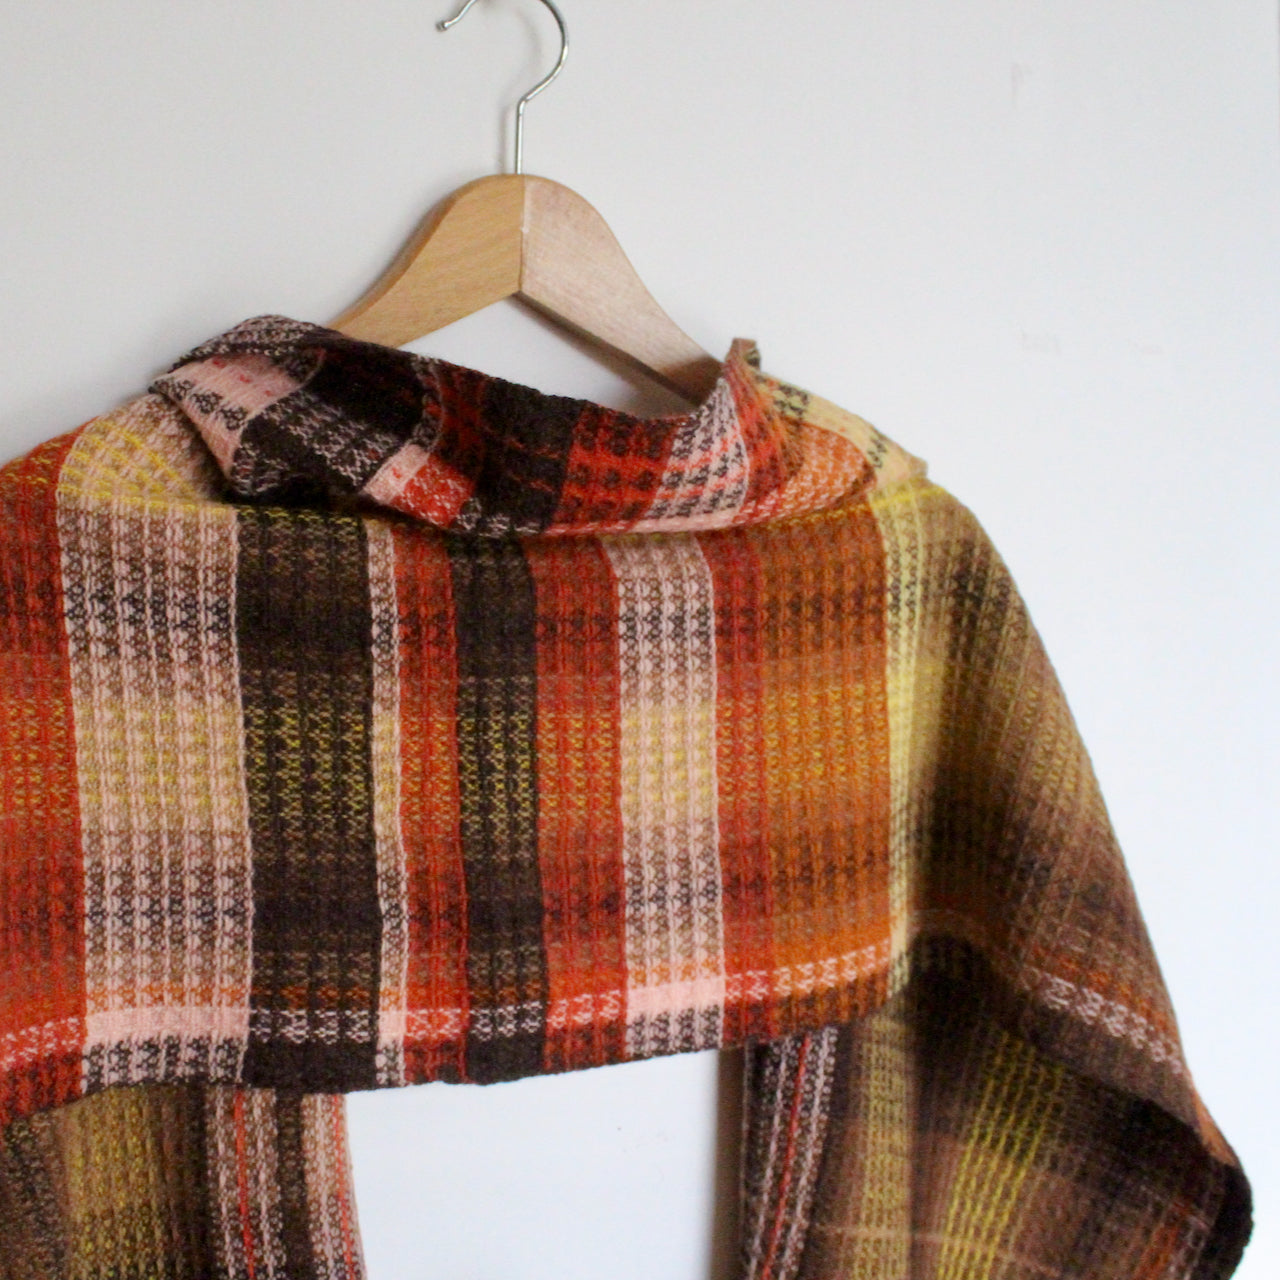 handwoven woollen scarf by Teresa Dunne Cornish weaver in pink, cream, brown and orange